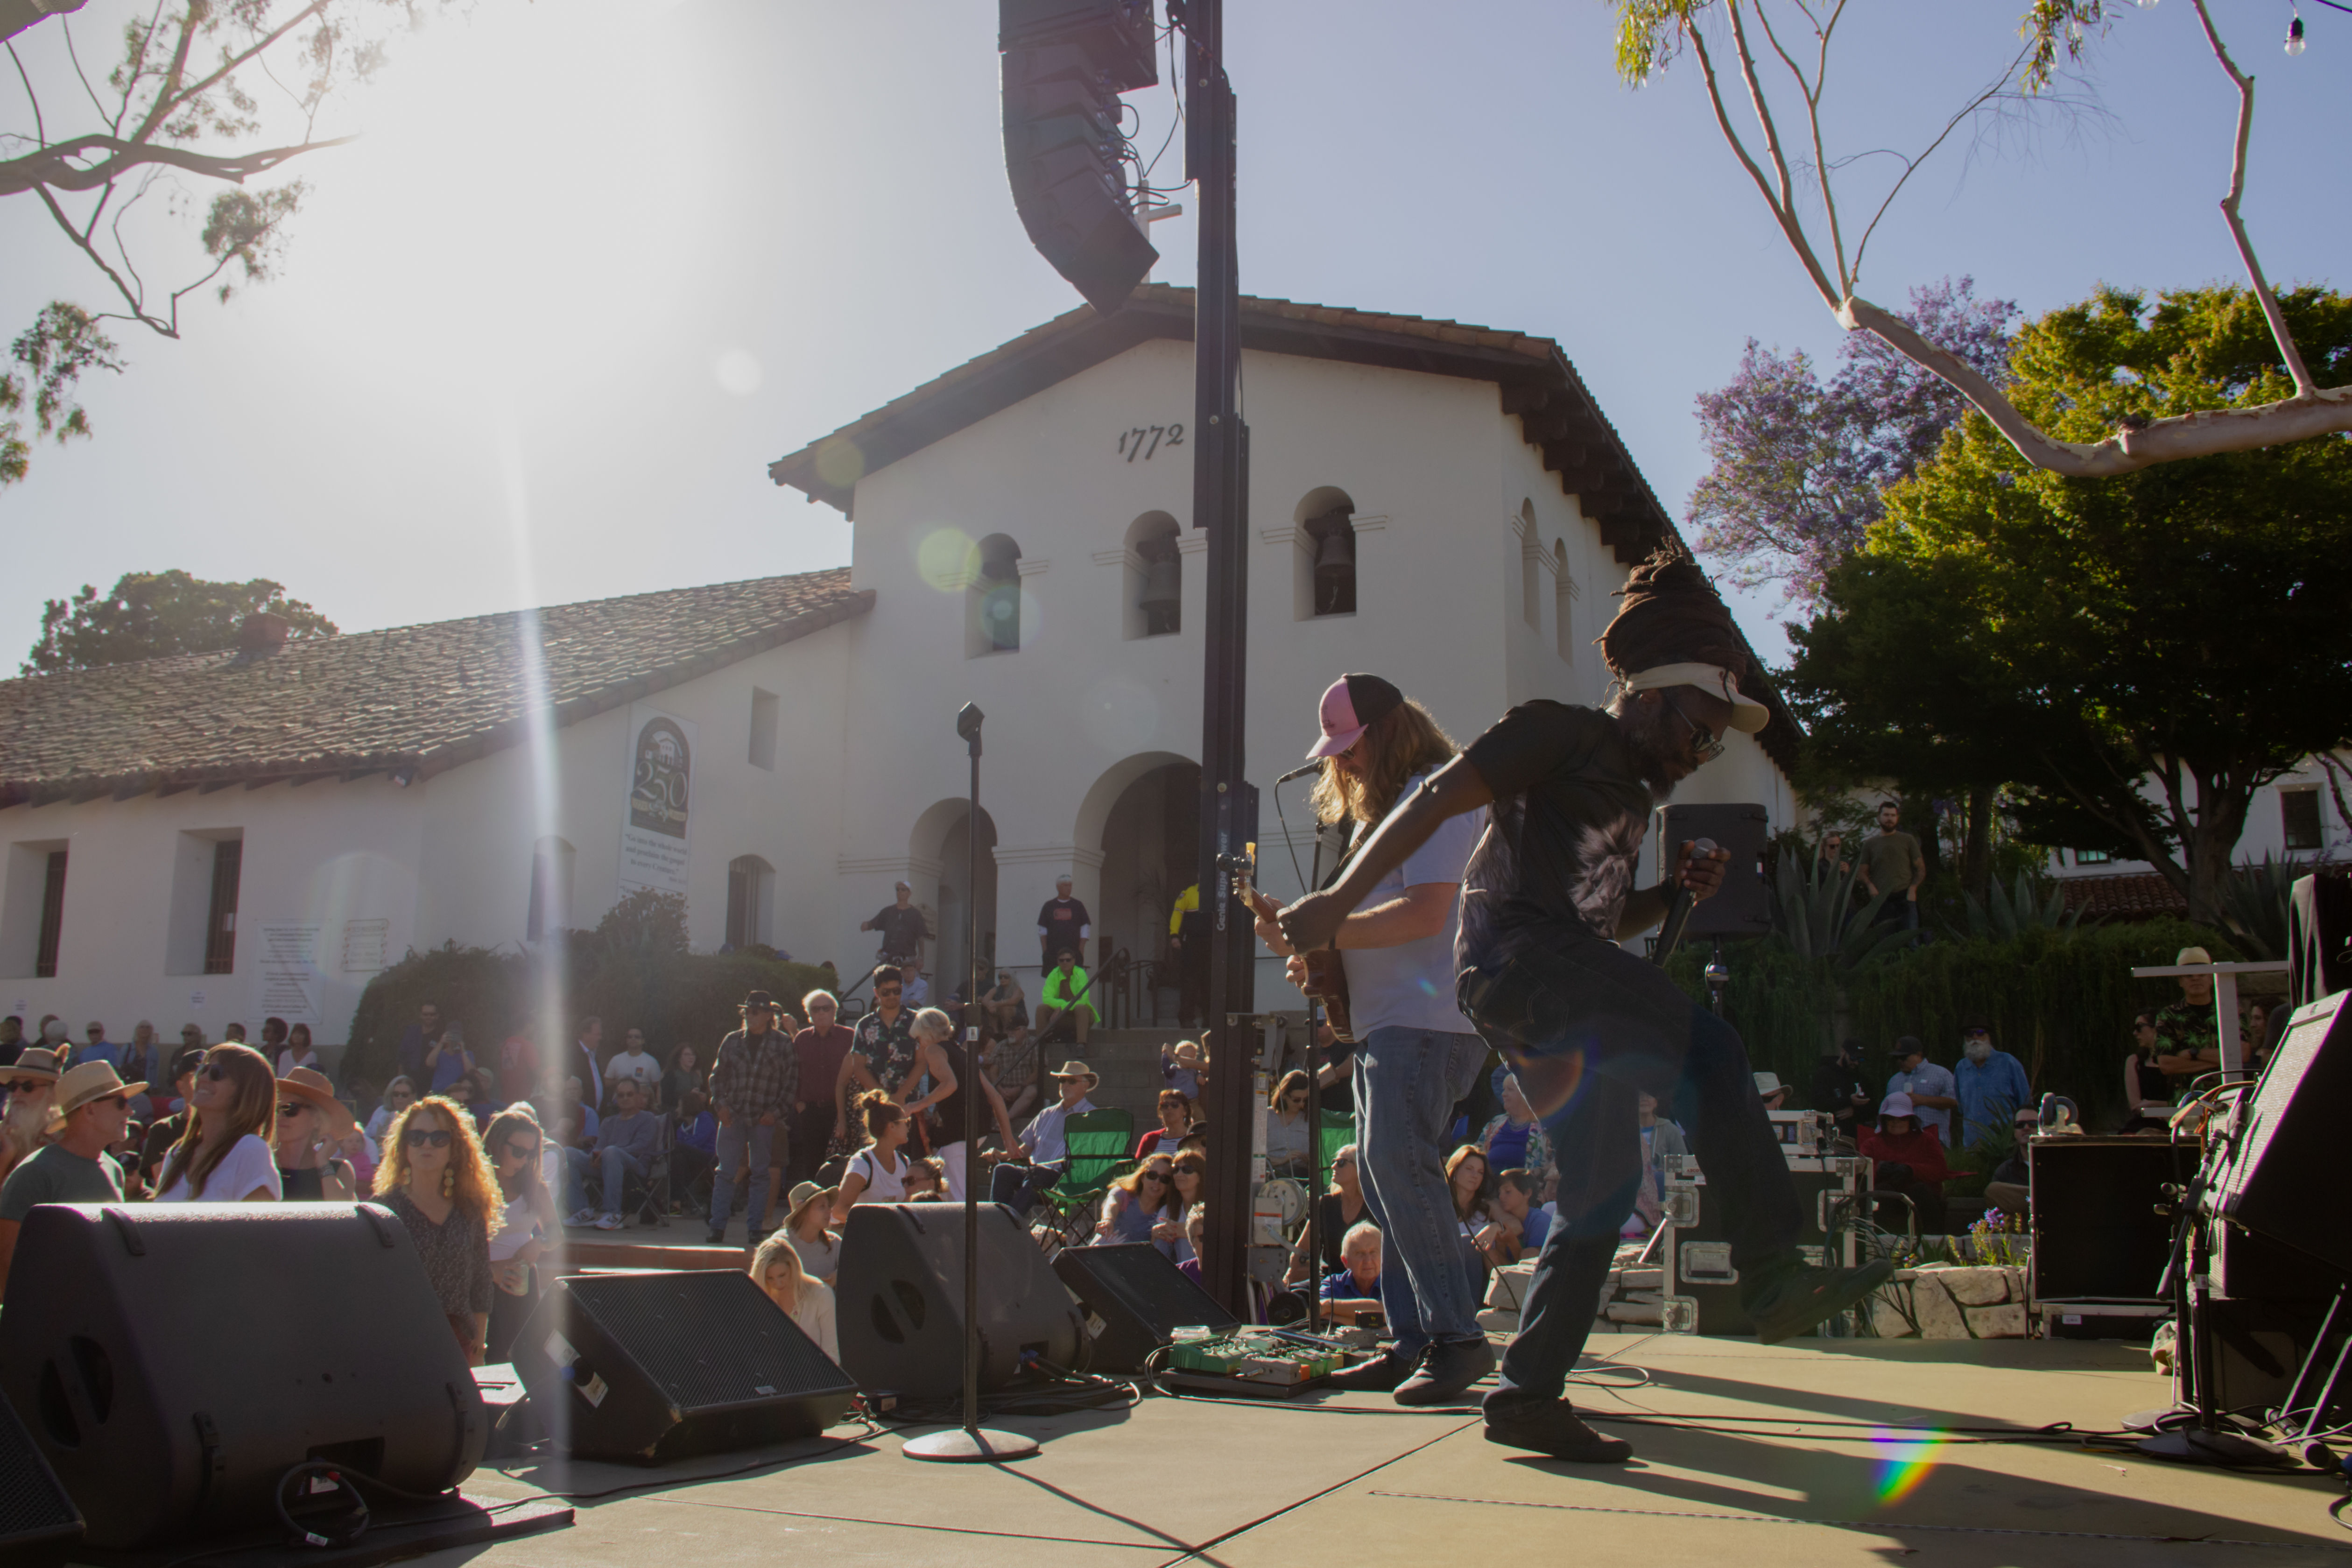 Concerts in the Plaza Free live music in San Luis Obispo